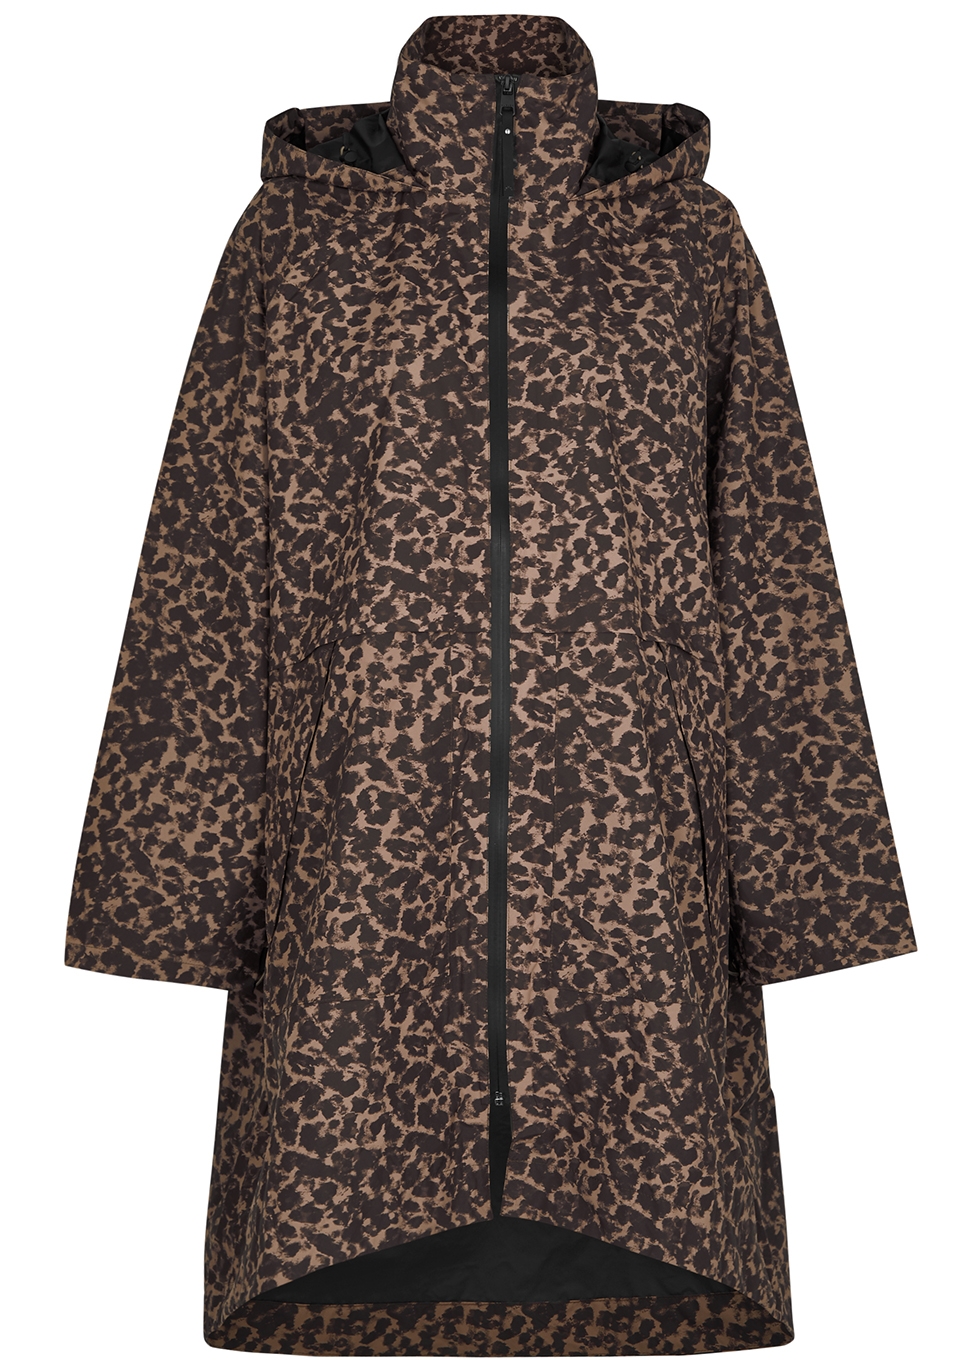 Varley Cavanagh 2.0 leopard-print shell jacket - Harvey Nichols